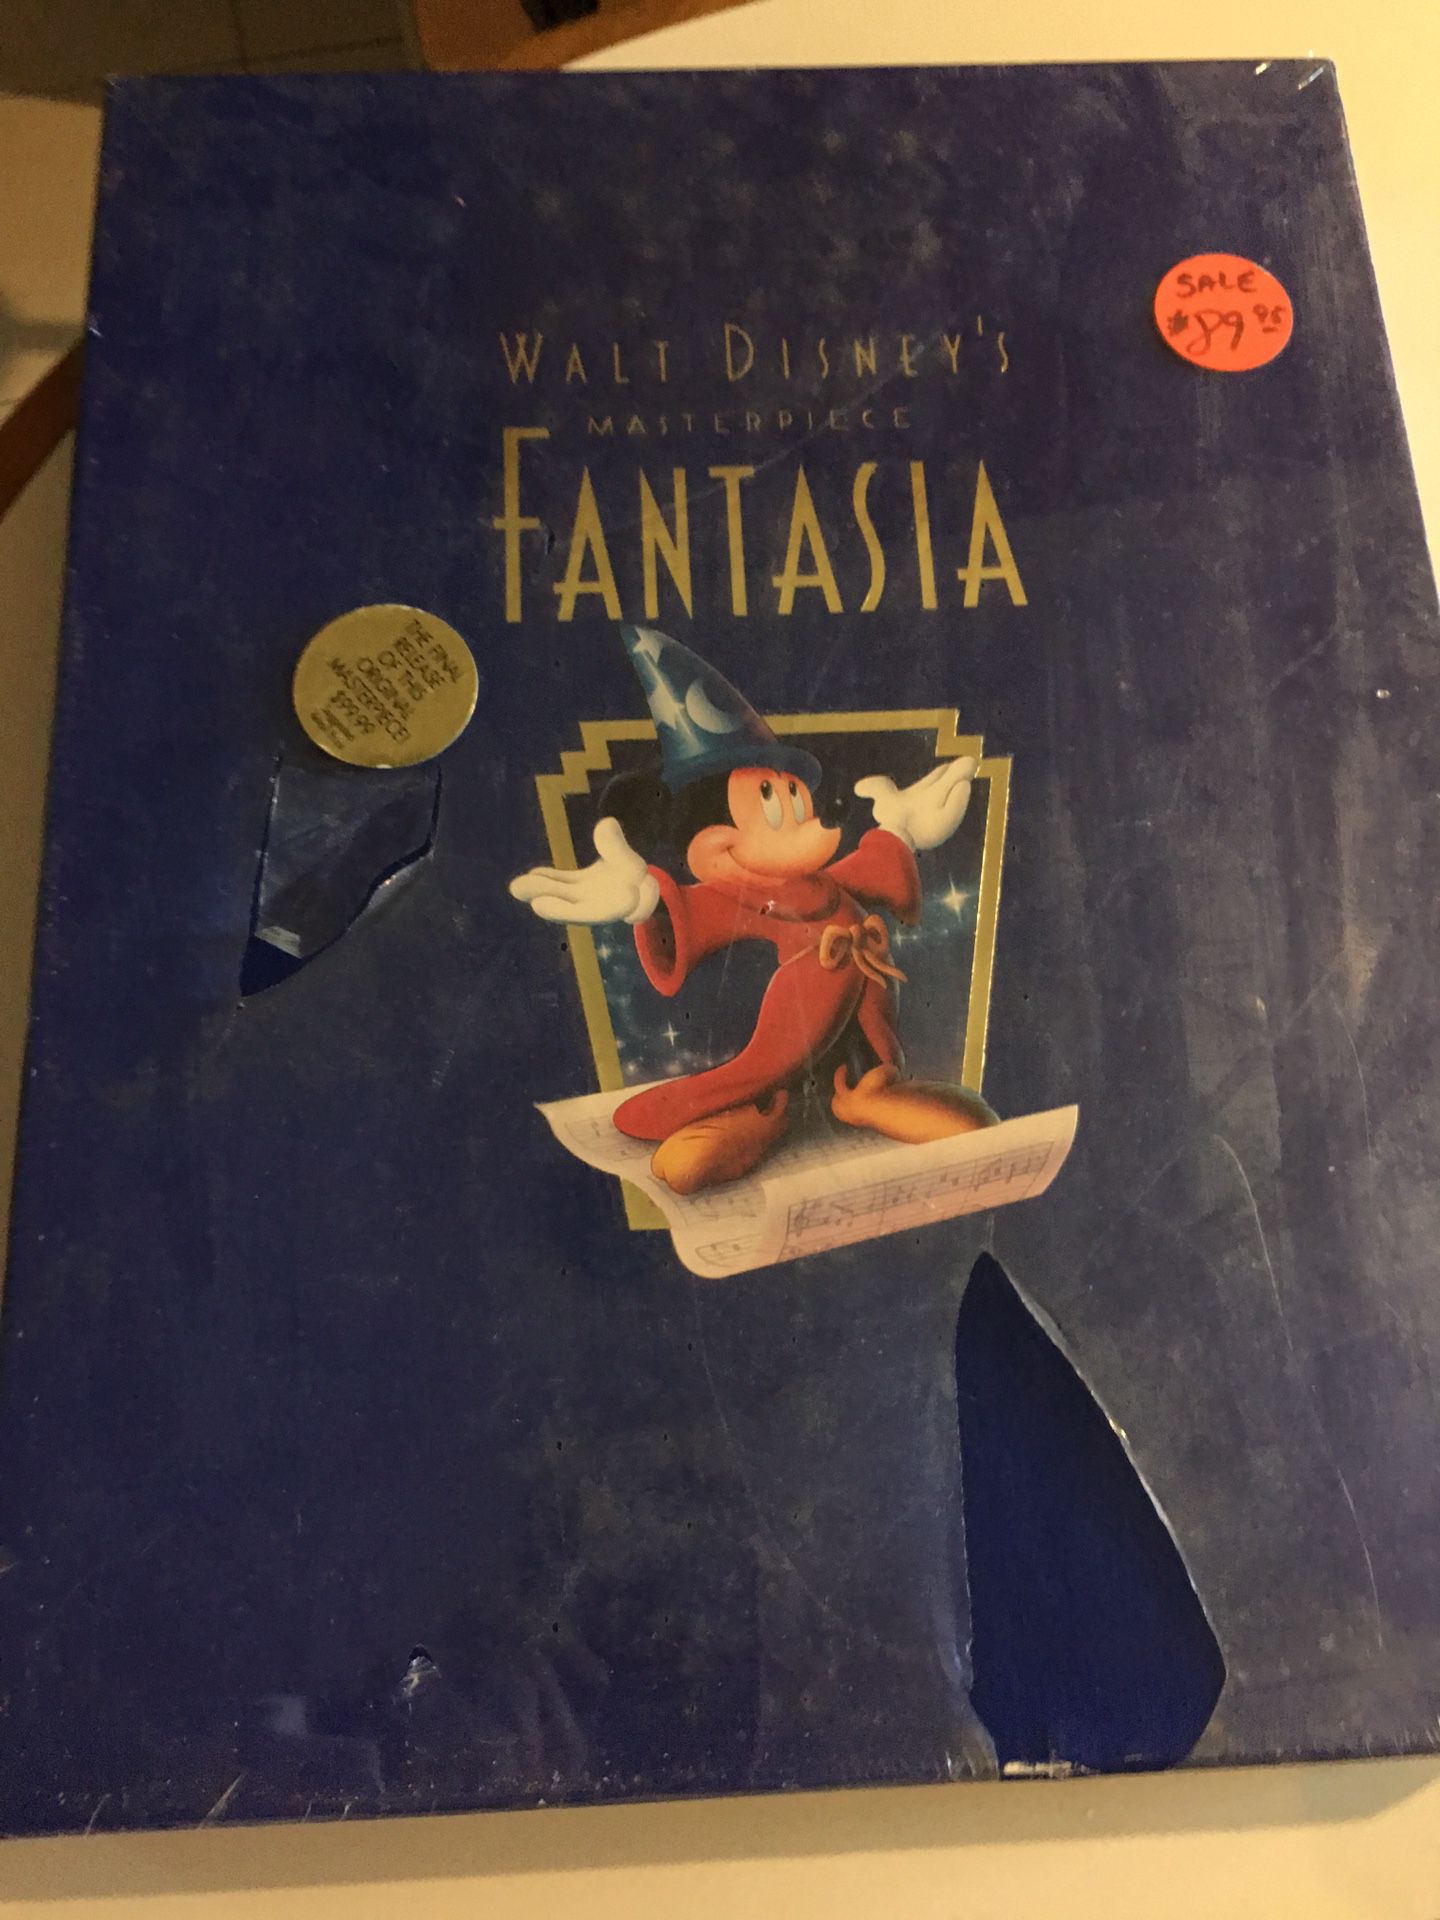 Fantasia the final release